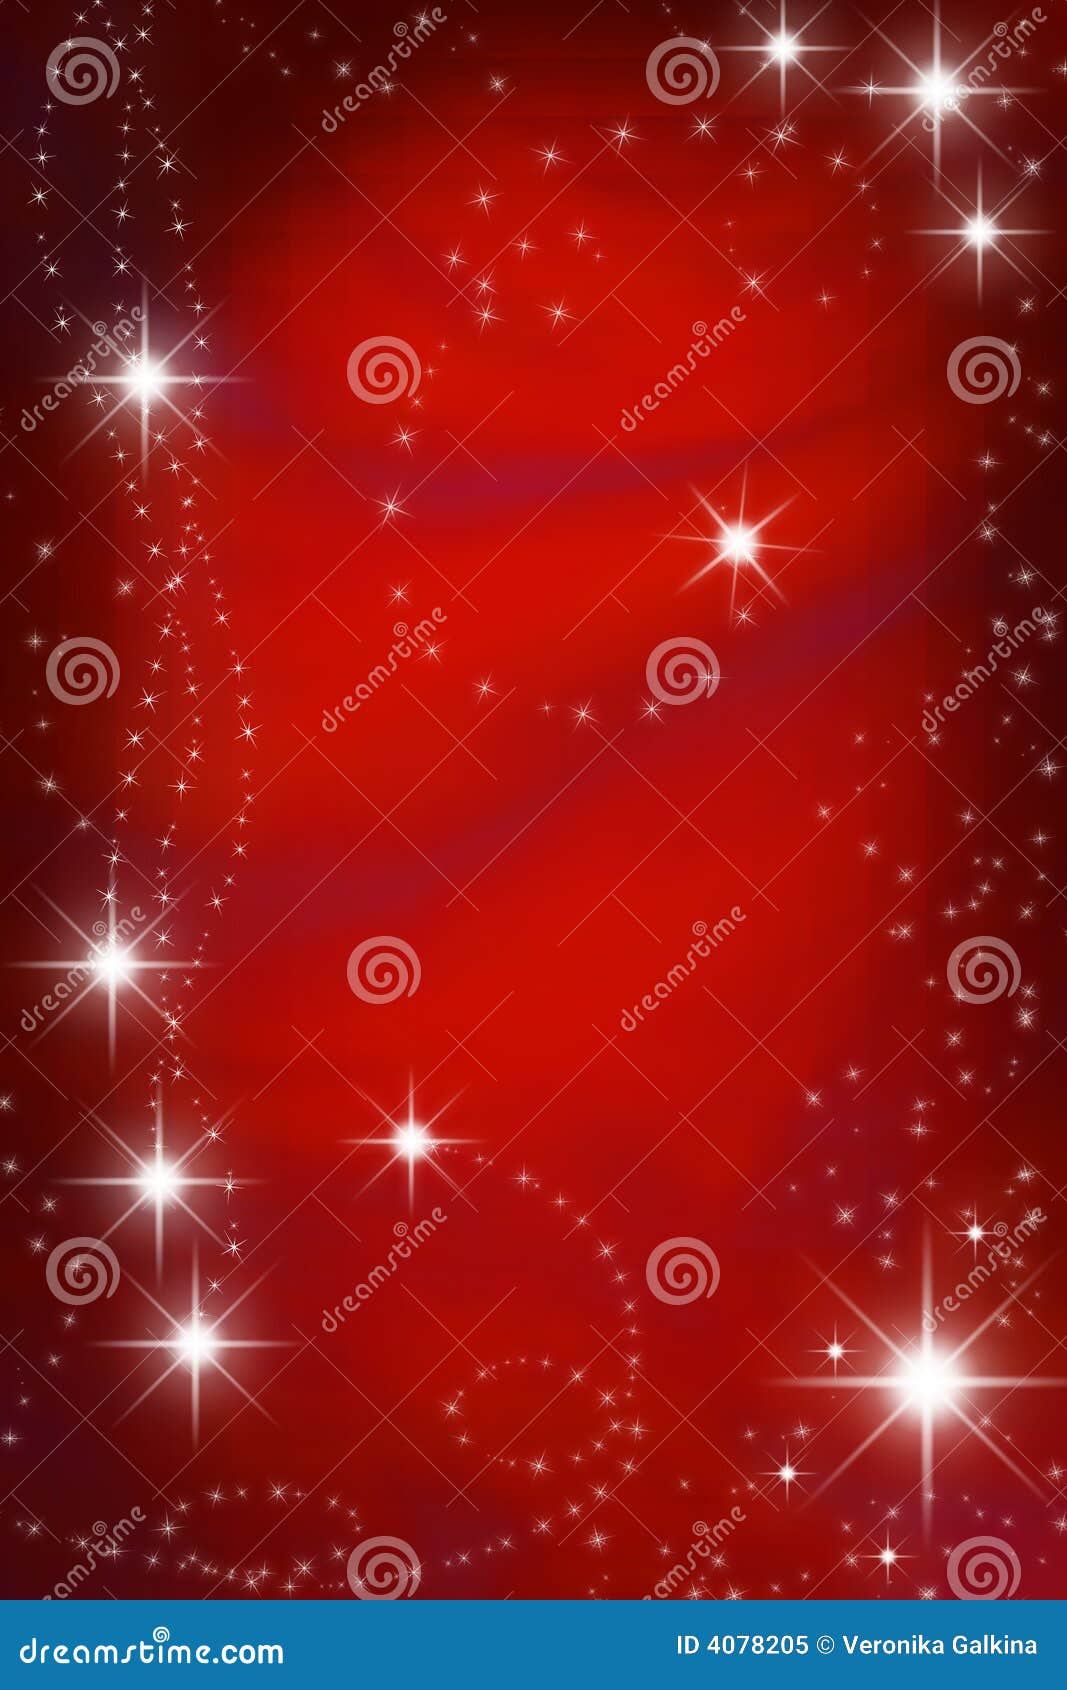 Magic red background stock illustration. Illustration of light - 4078205